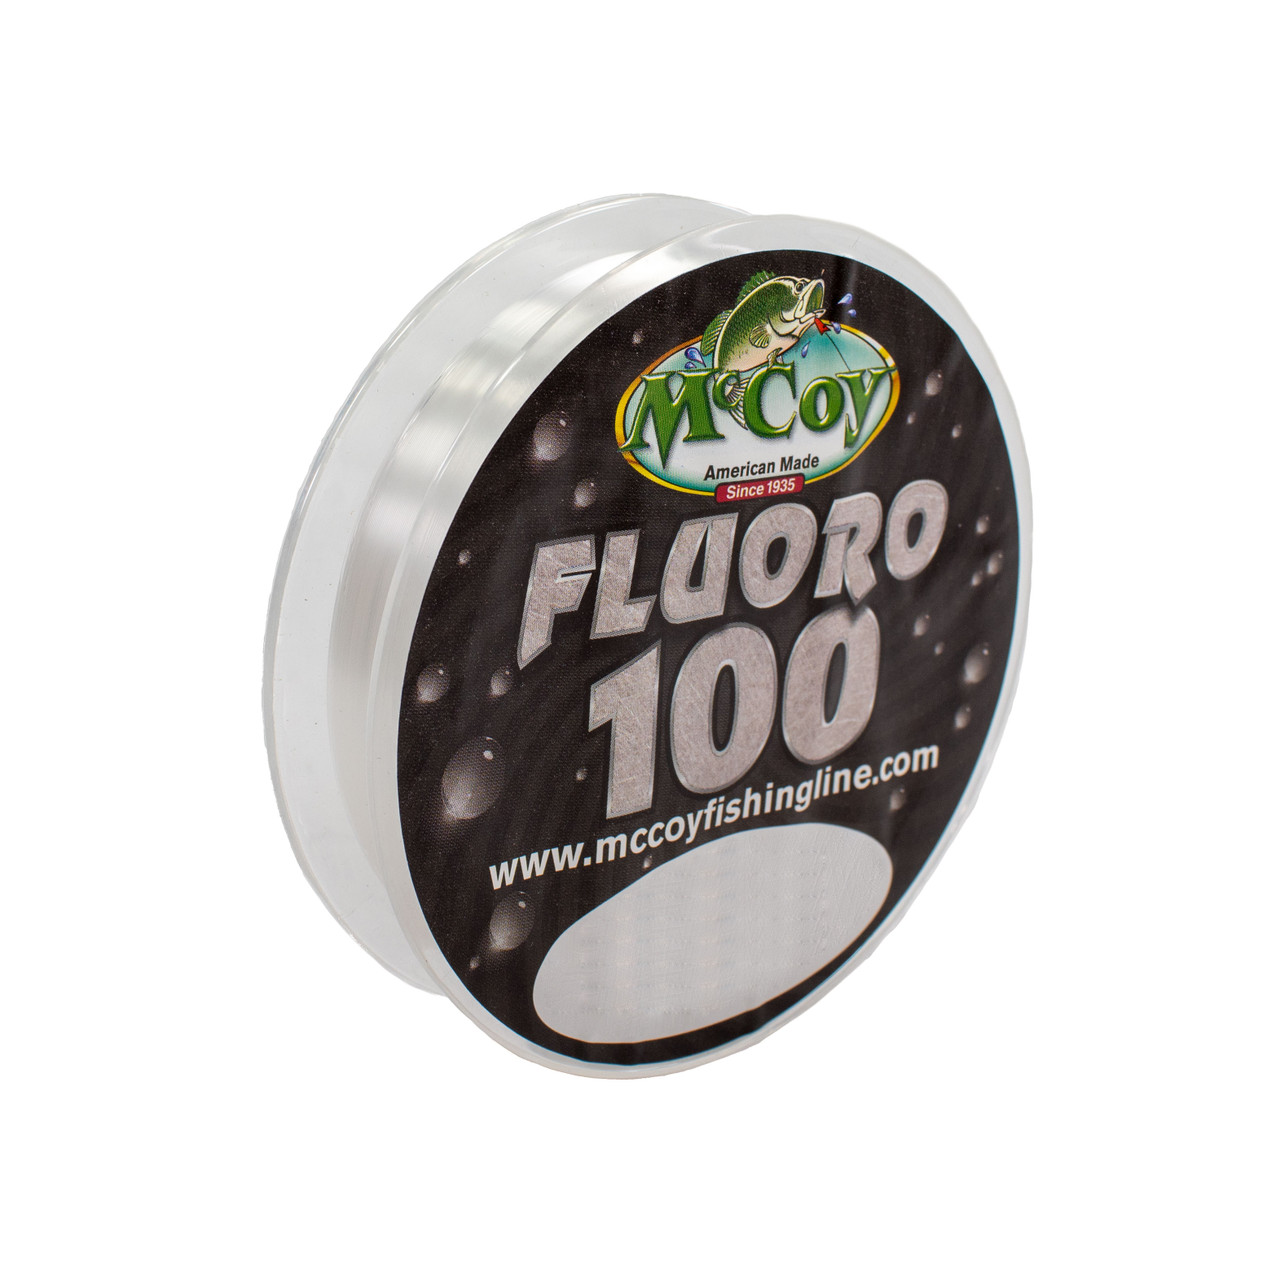 McCoy Fluoro 100 Premium Fluorocarbon Fishing Line